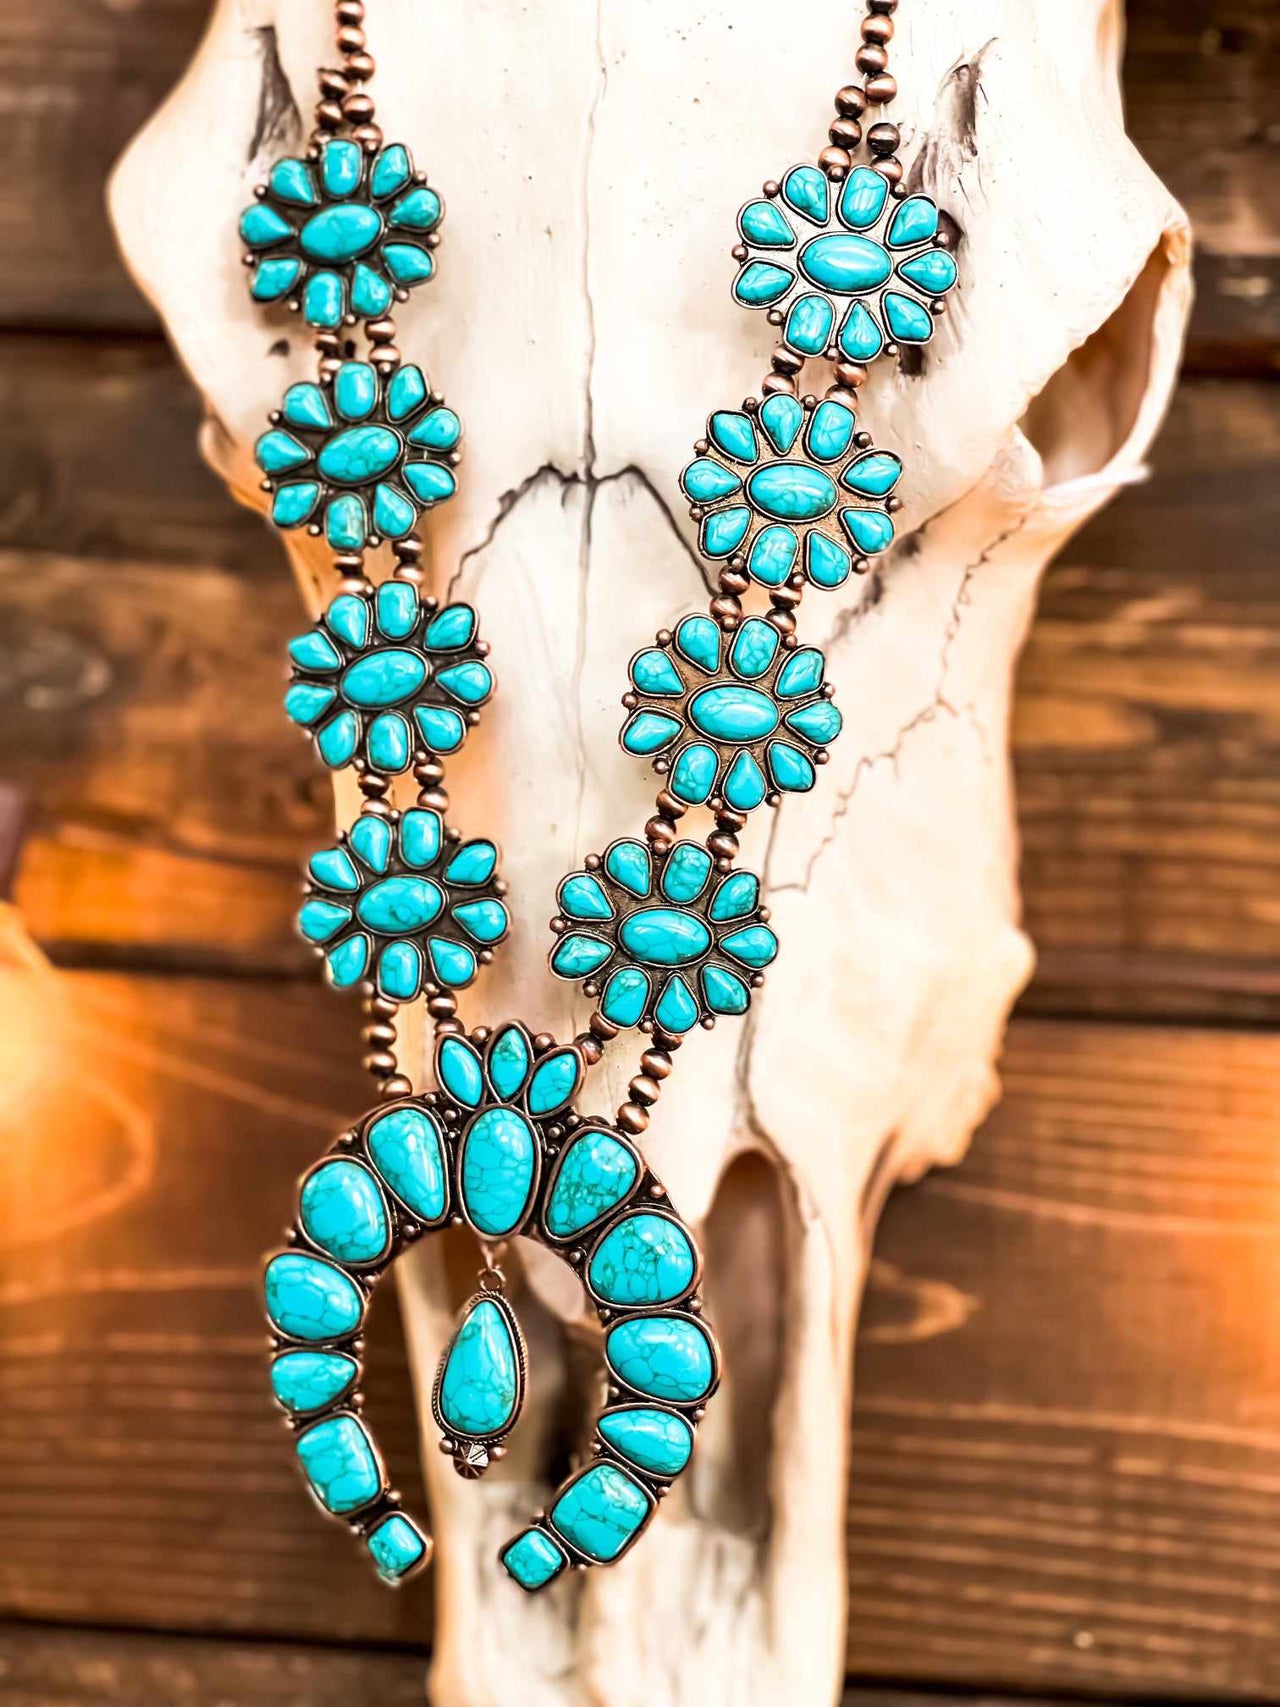 Turquoise stone squash blossom necklace.